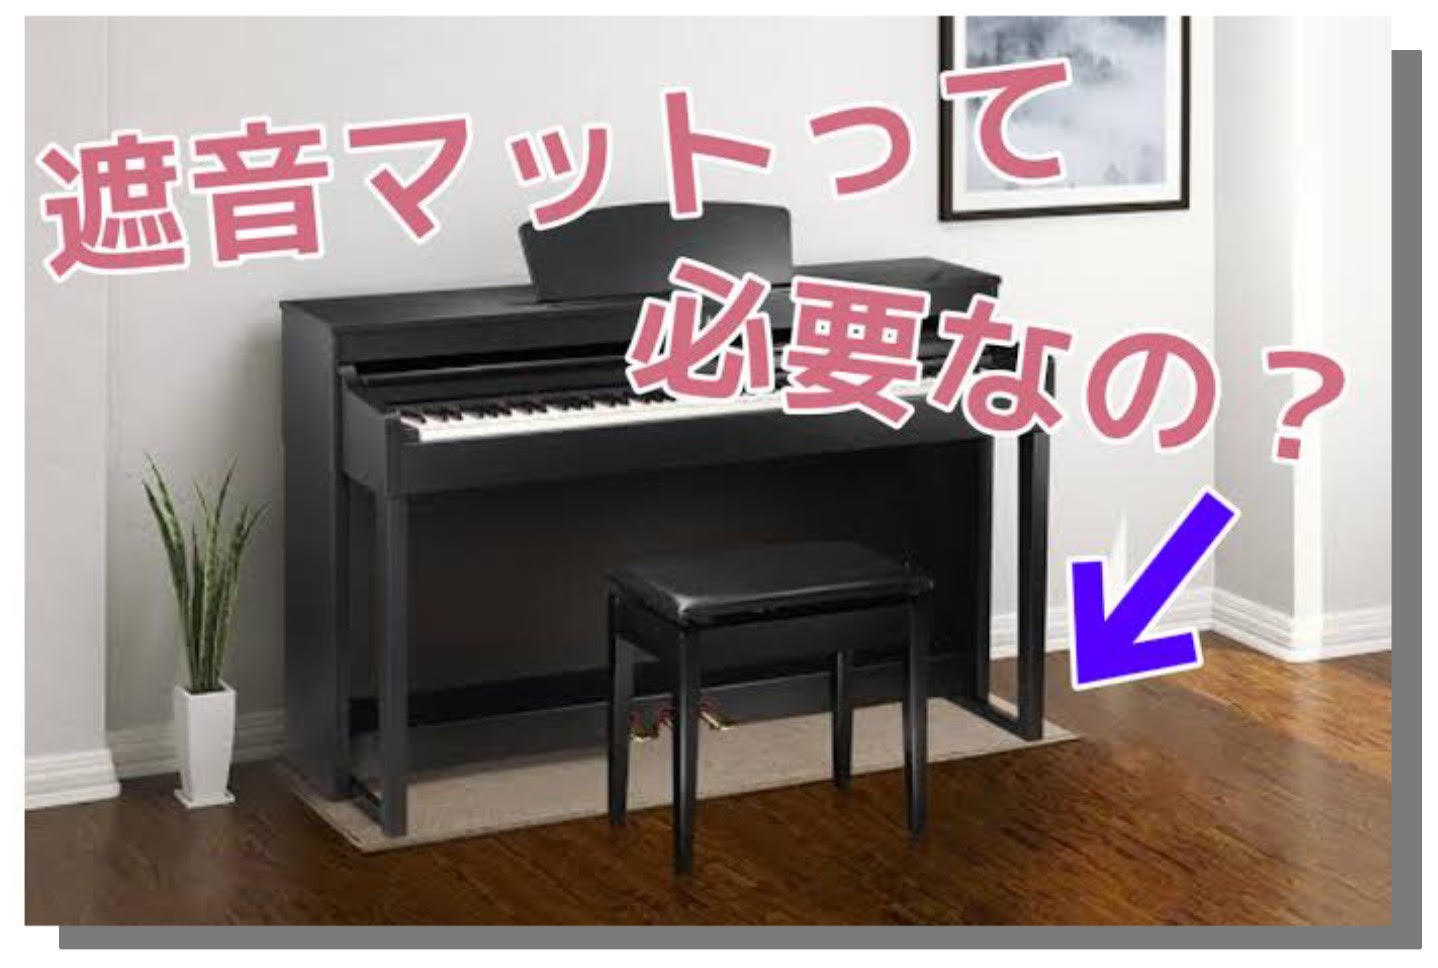 EMUL CPT300L 電子ピアノ用 防音 マット ベージュカラー (エミュール 遮音 防振 カーペット) (島村楽器 限定) 楽器アクセサリー